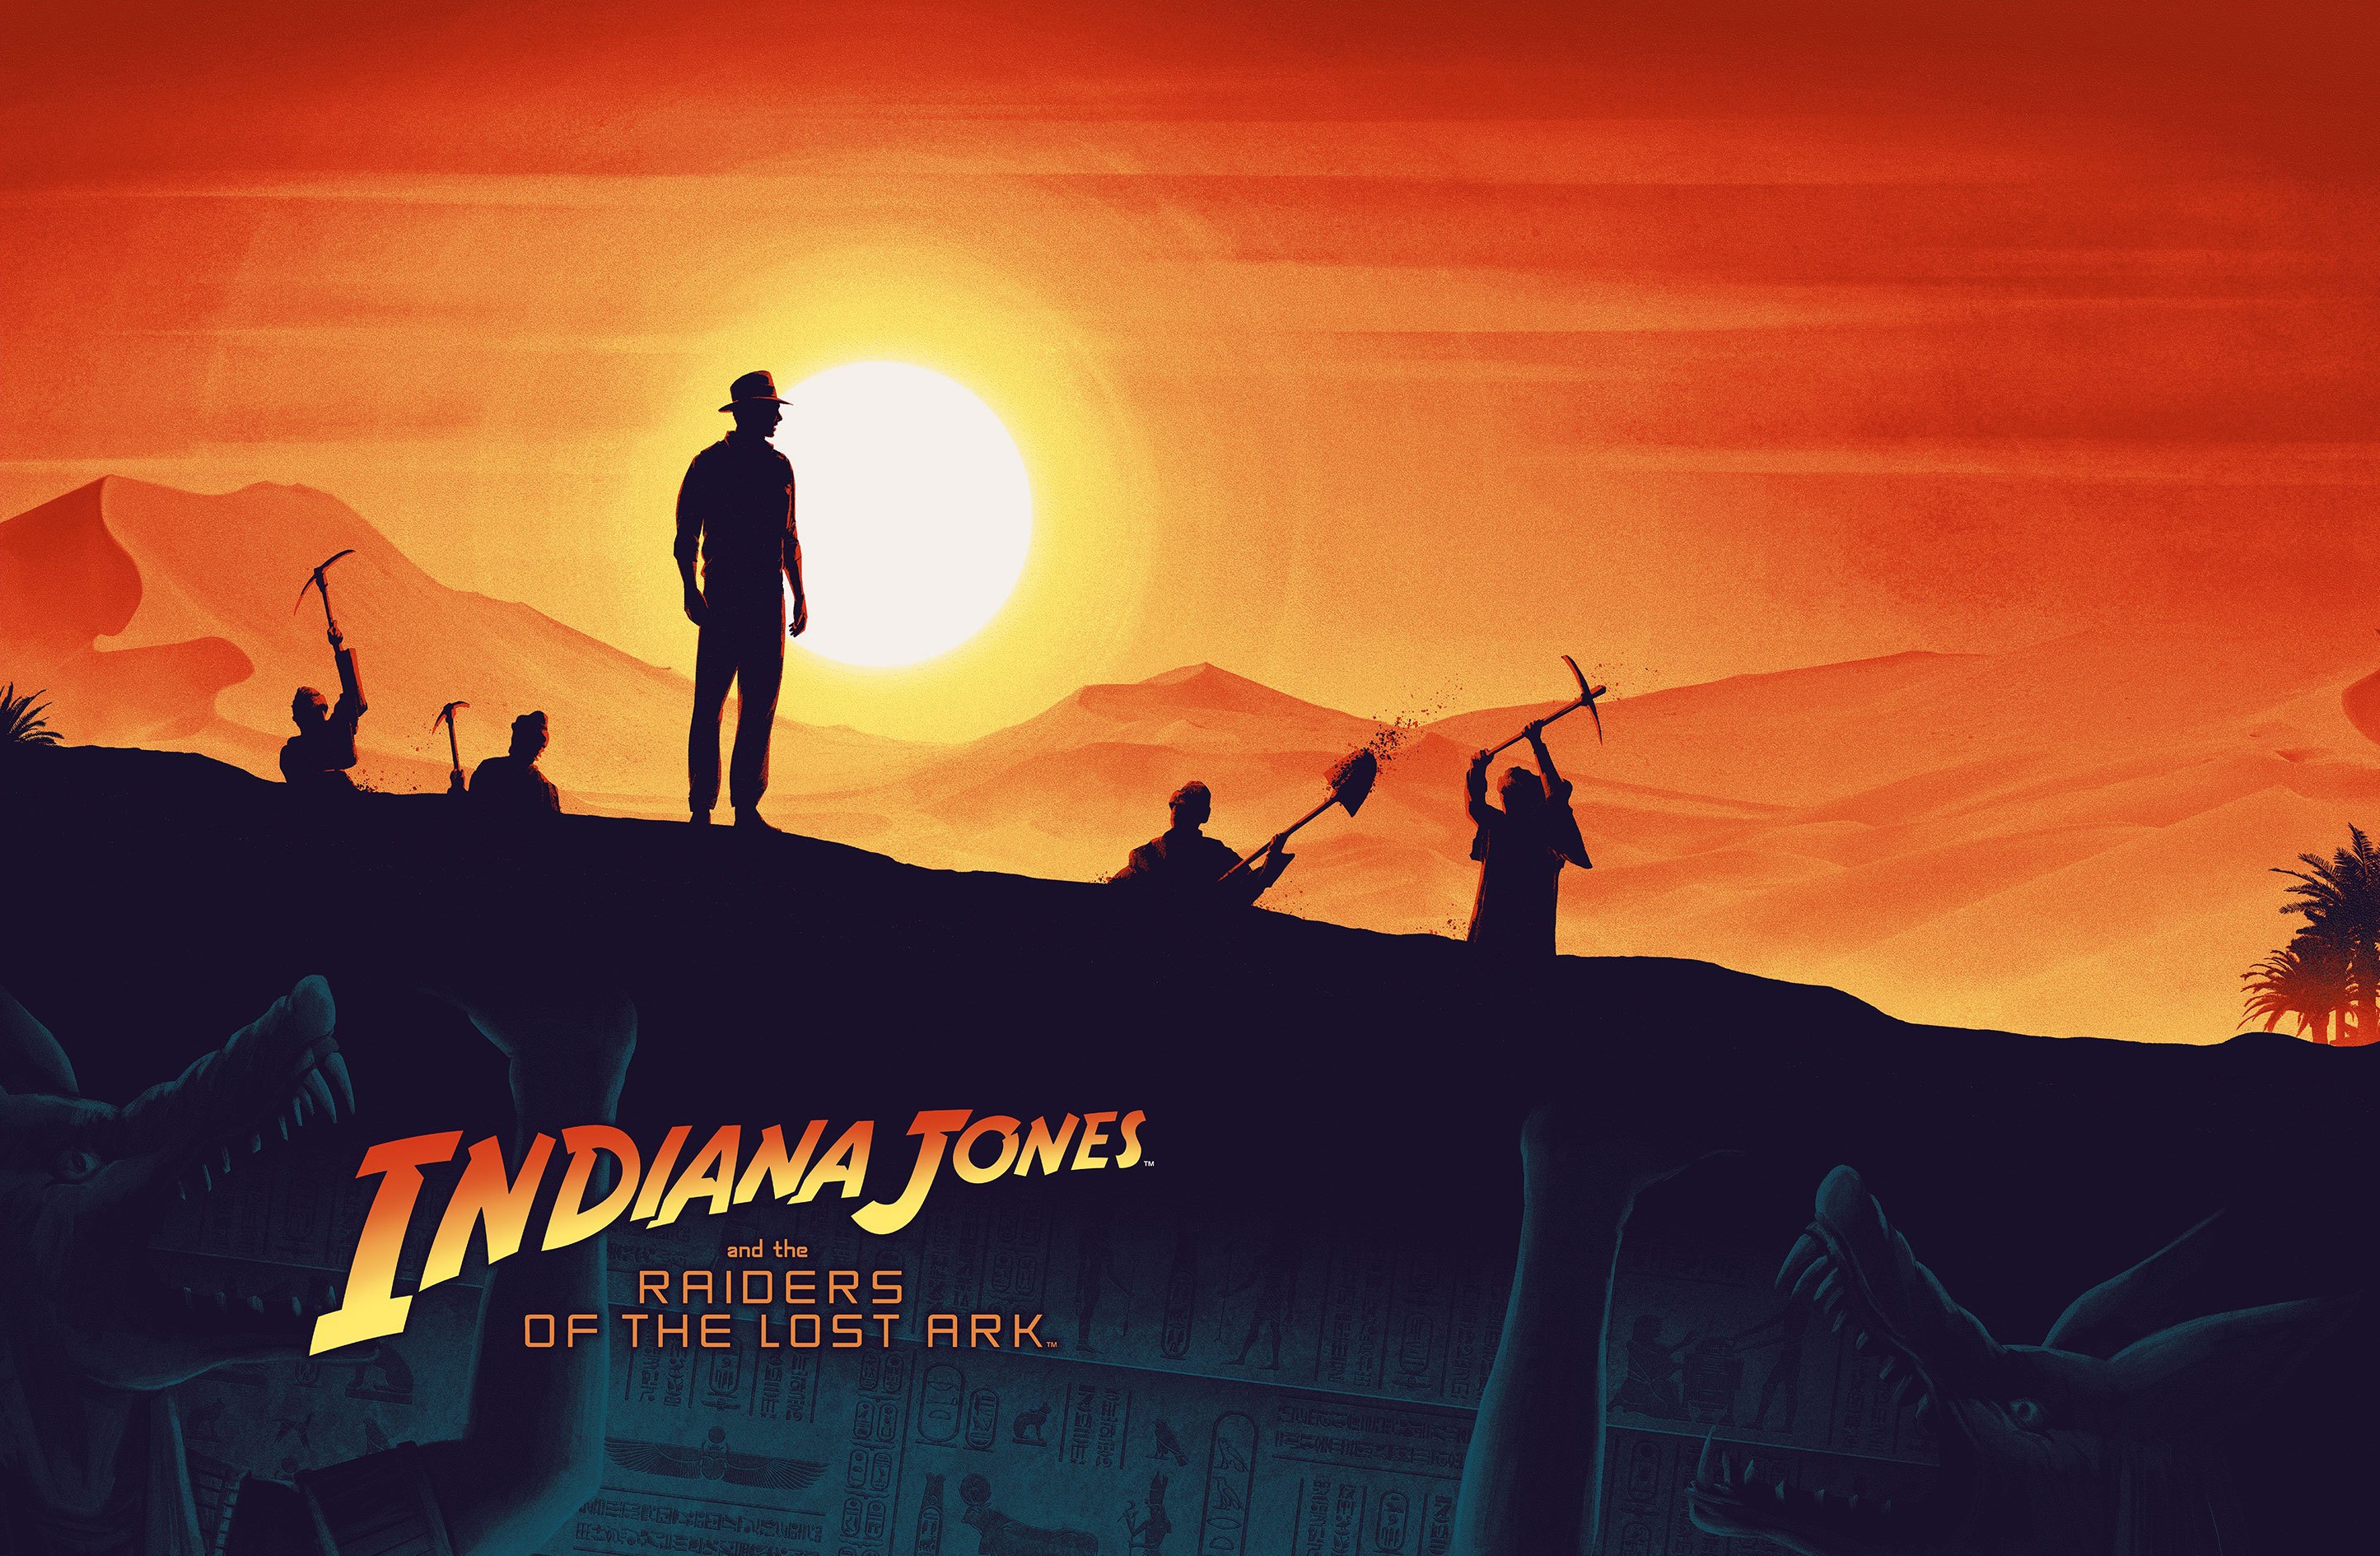 1981 Year Movies Indiana Jones Indiana Jones And The Raiders Of The Lost Ark Artwork 2890x1890